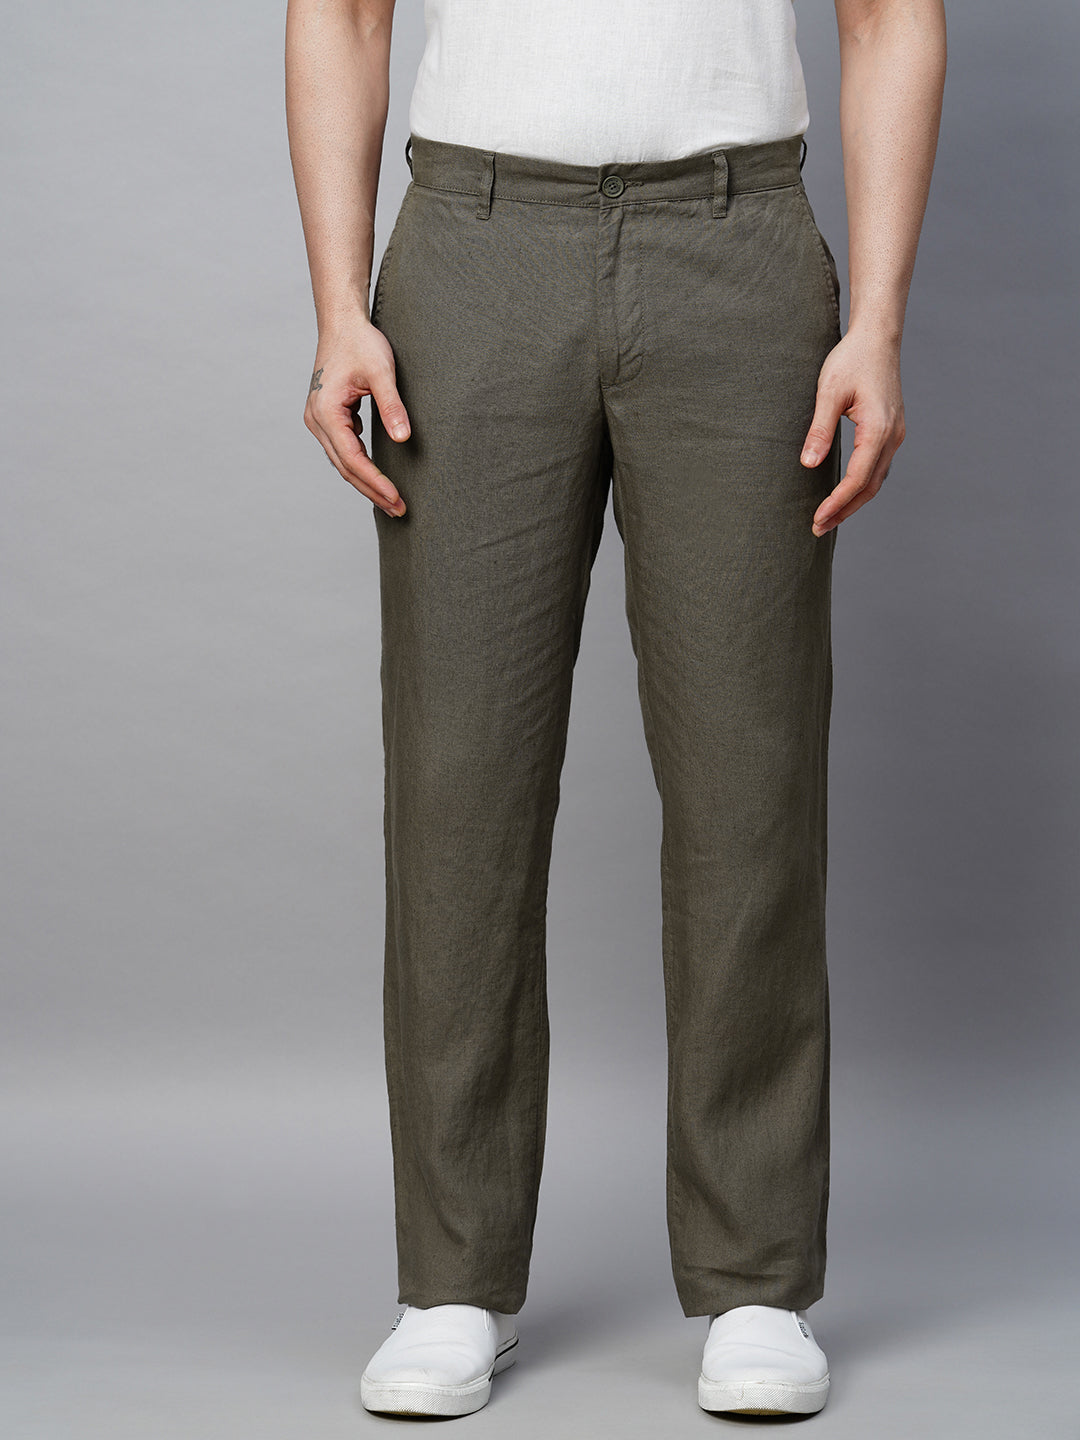 Men's Grey 100% Linen Regular Fit Pant